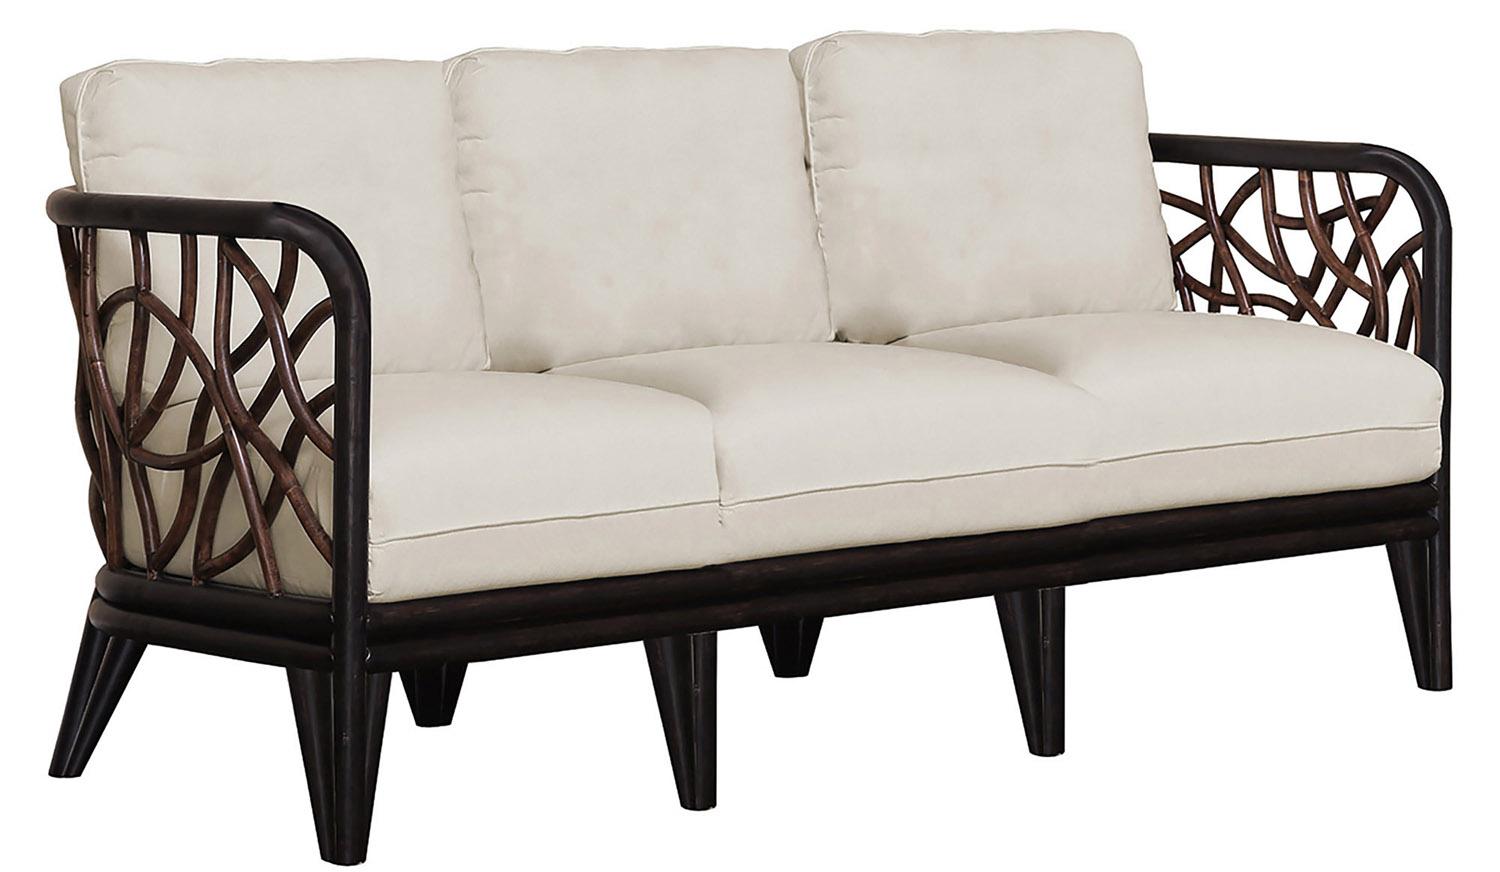 Classic Outdoor Sofa Trinidad PJS-1401-BLK-S in Beige, Black Fabric